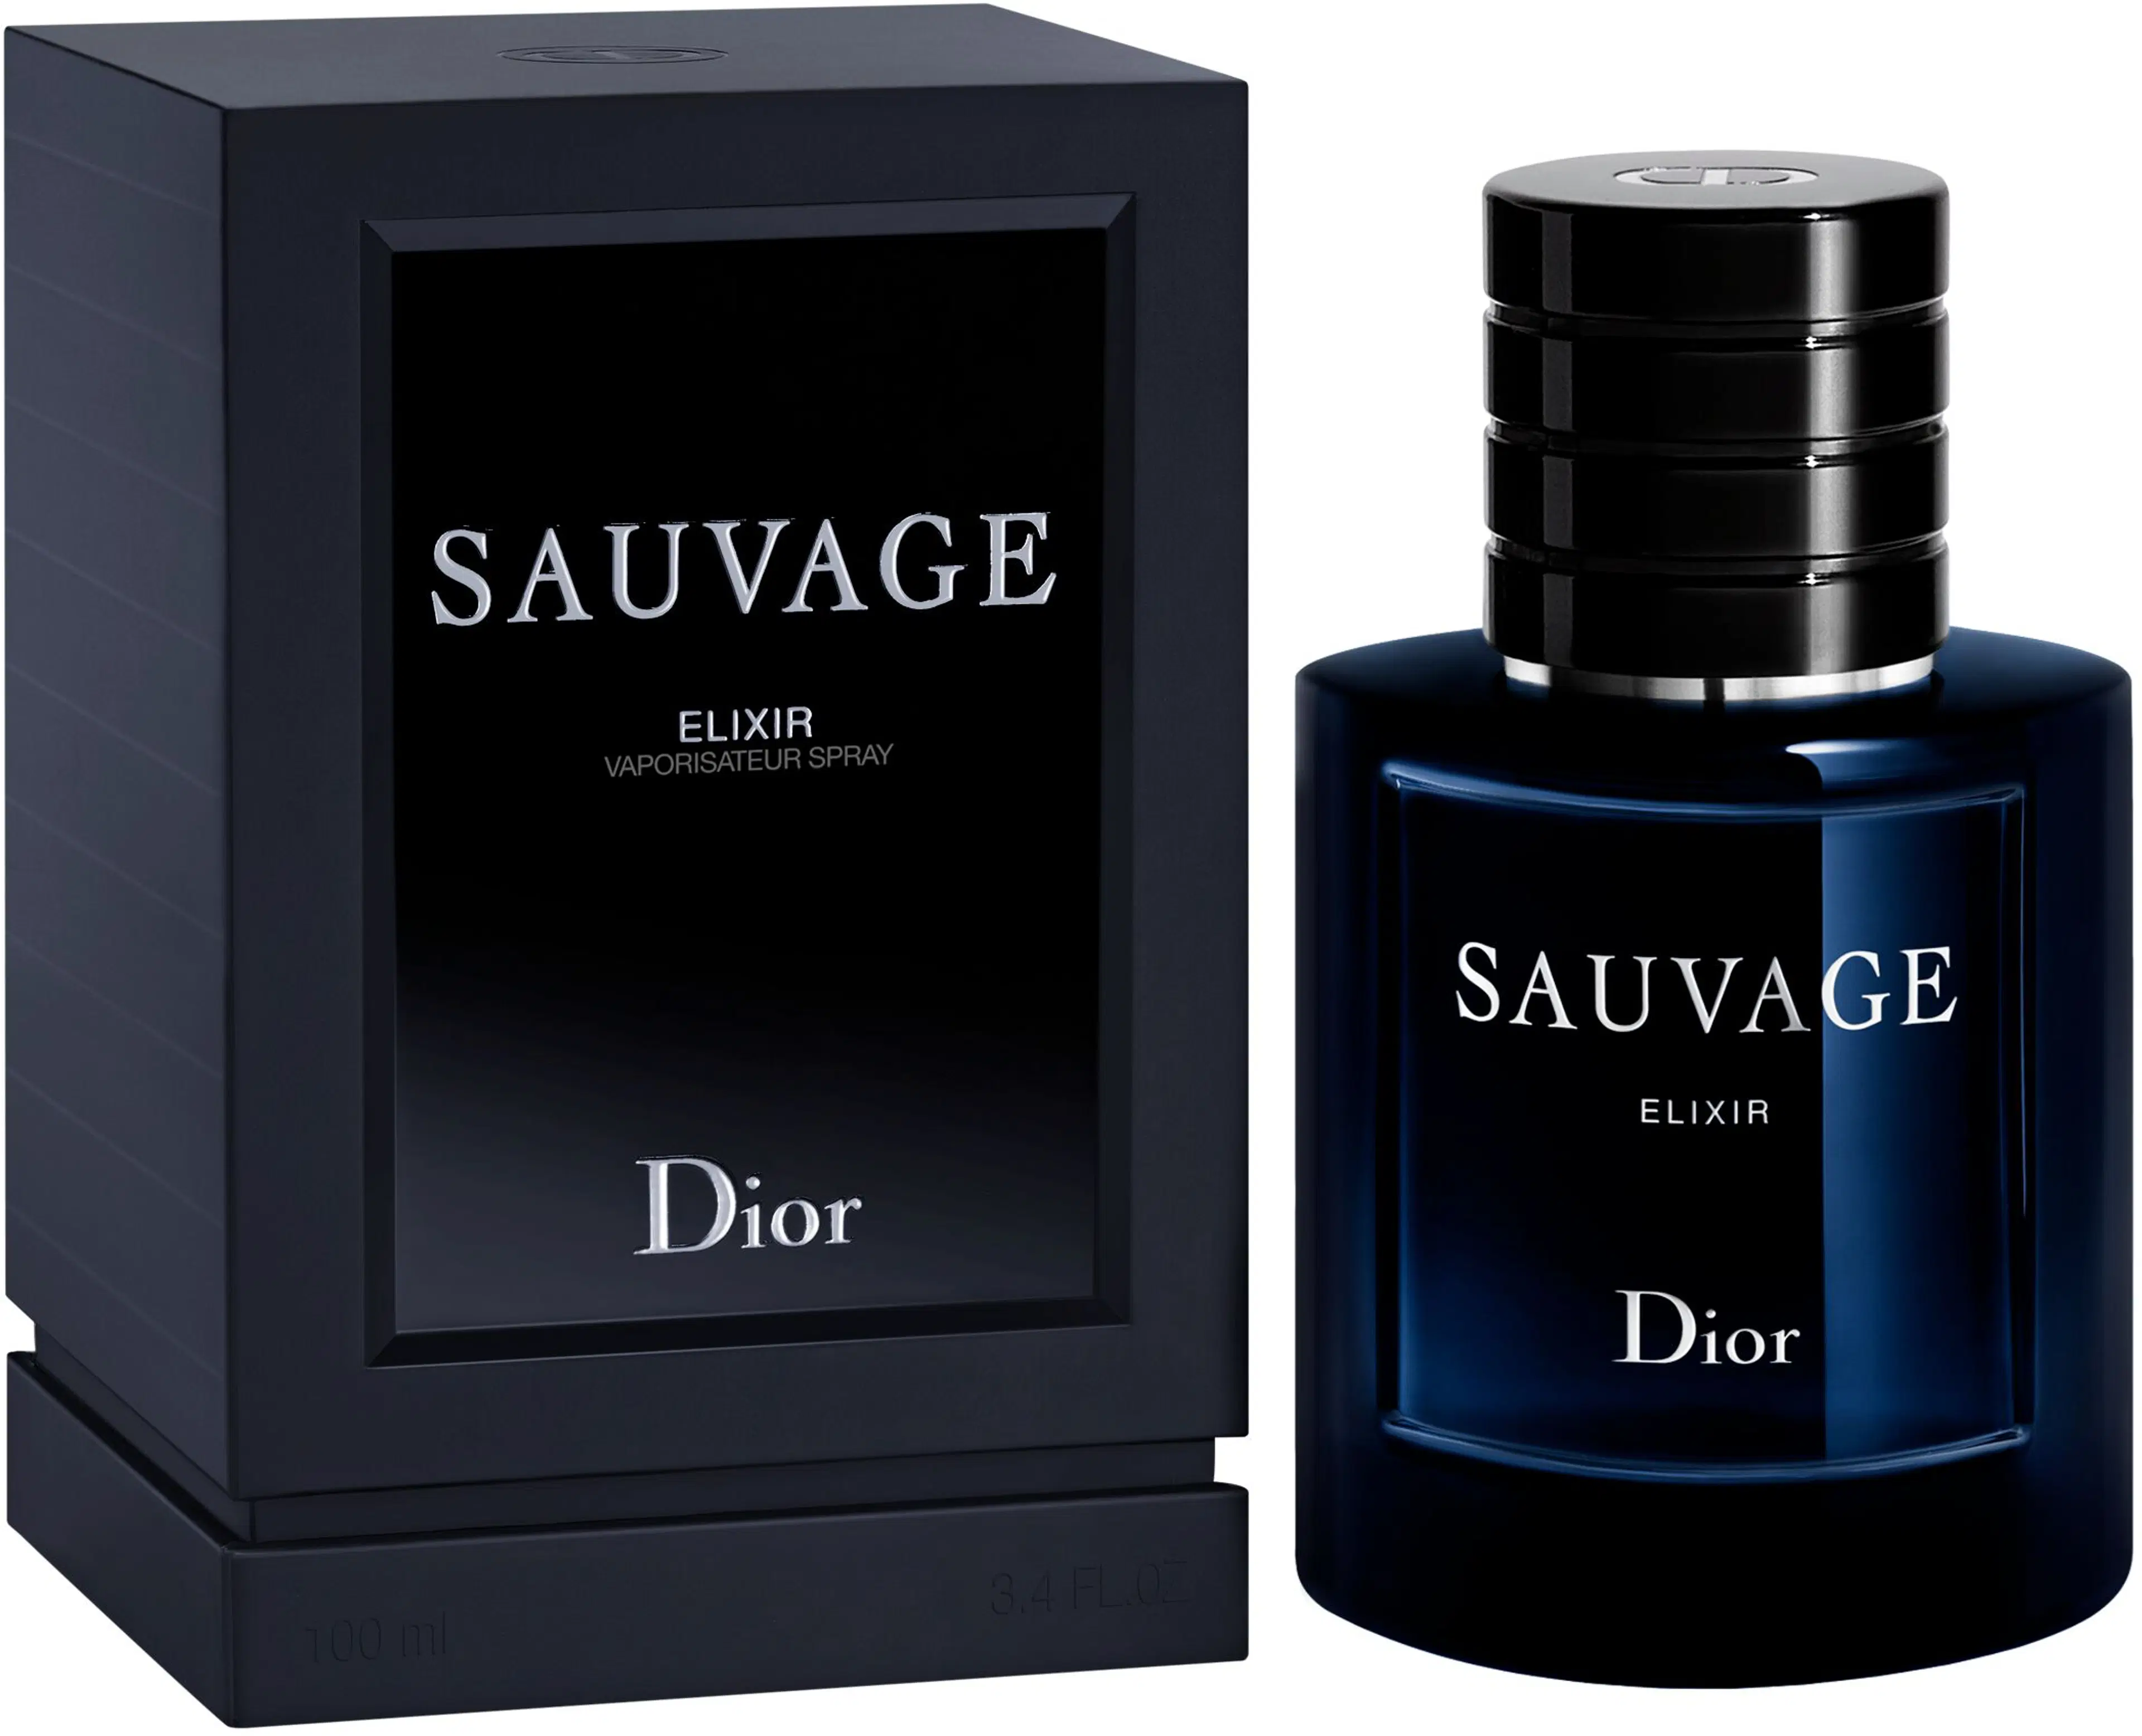 DIOR Sauvage Elixir tuoksu 100 ml